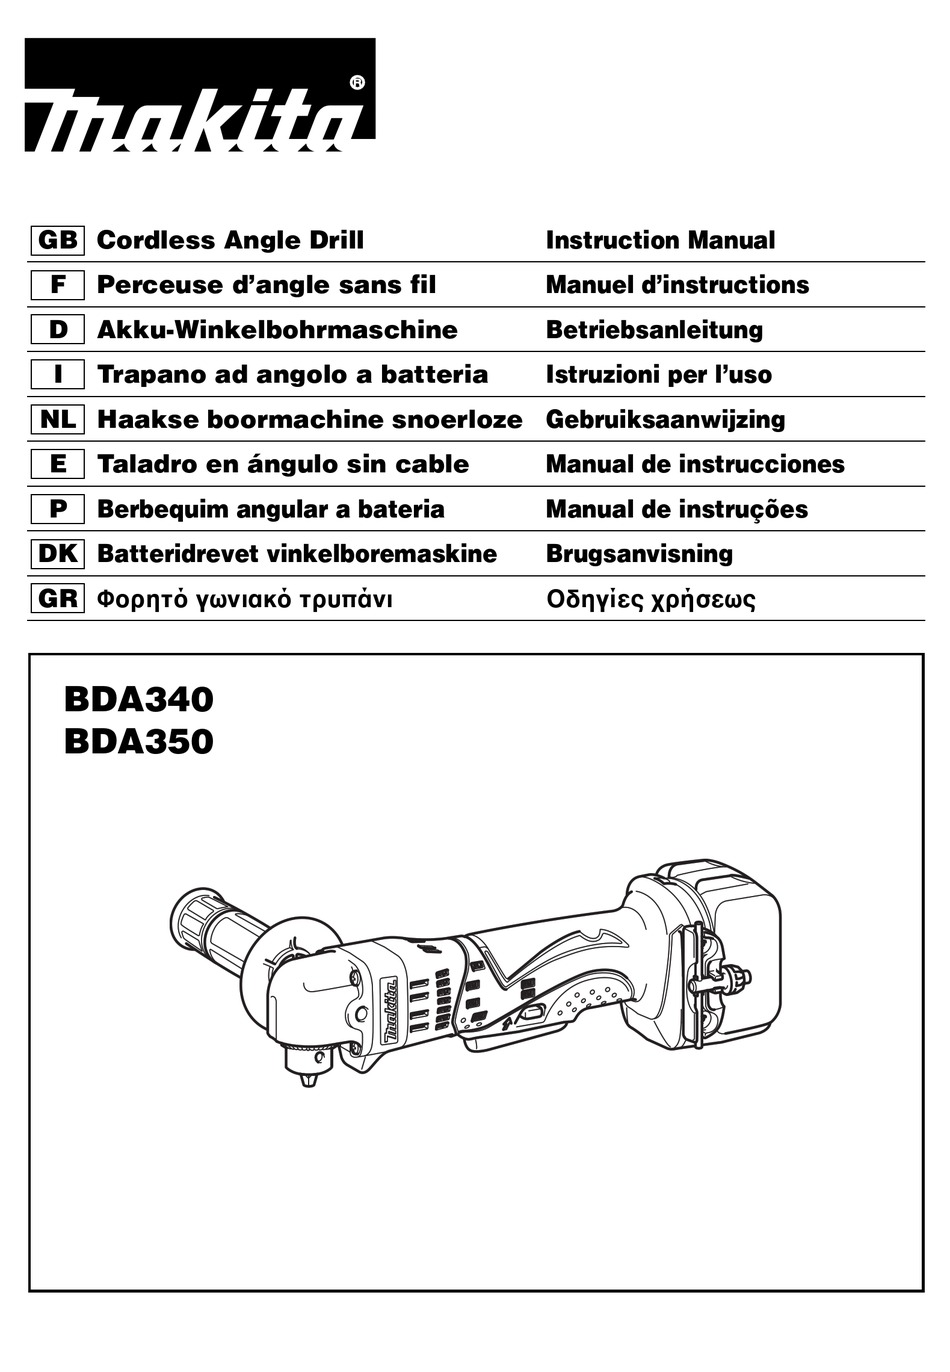 BDA340 INSTRUCTION MANUAL Pdf Download | ManualsLib